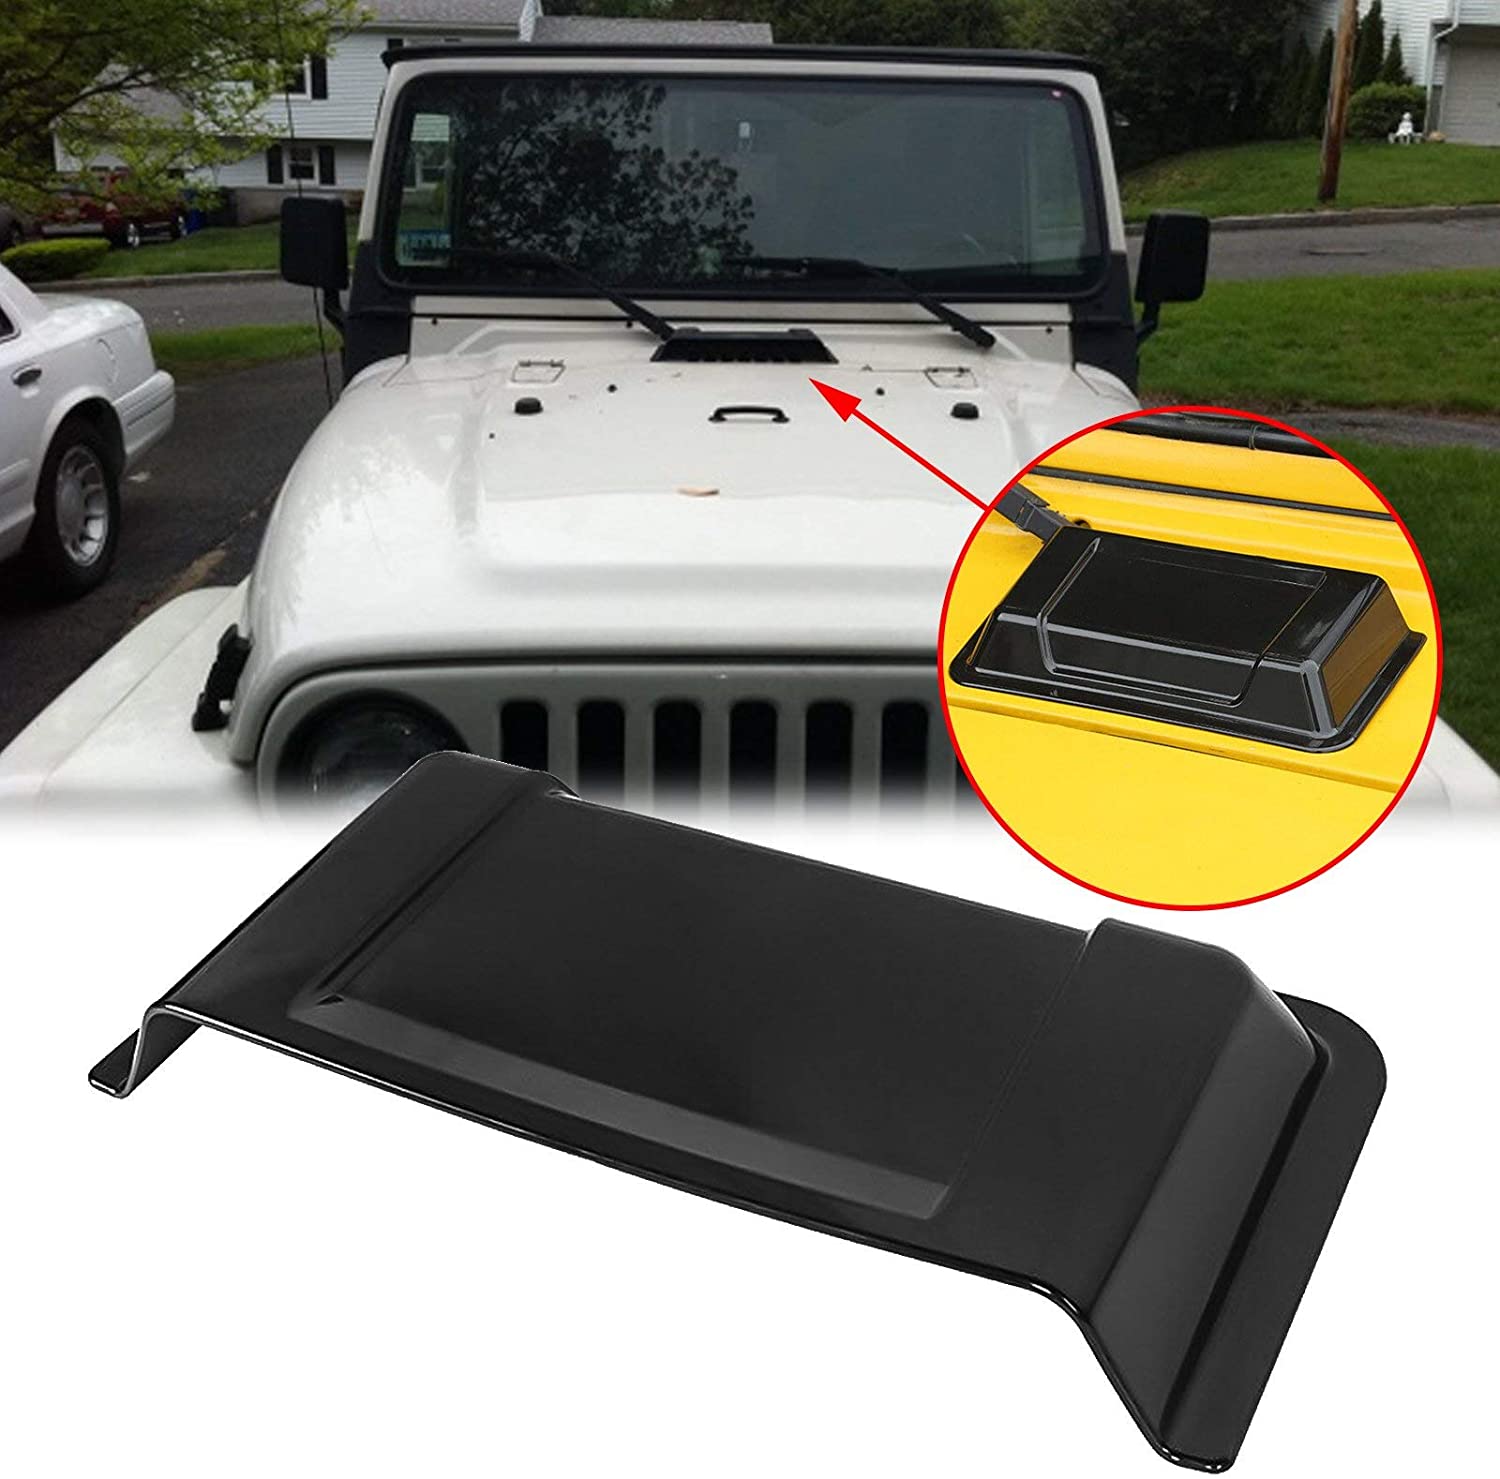 Xotic Tech Black Cowl Hood Vent Scoop Cover Air Vent Accessories for Jeep Wrangler JK TJ 1998-2018